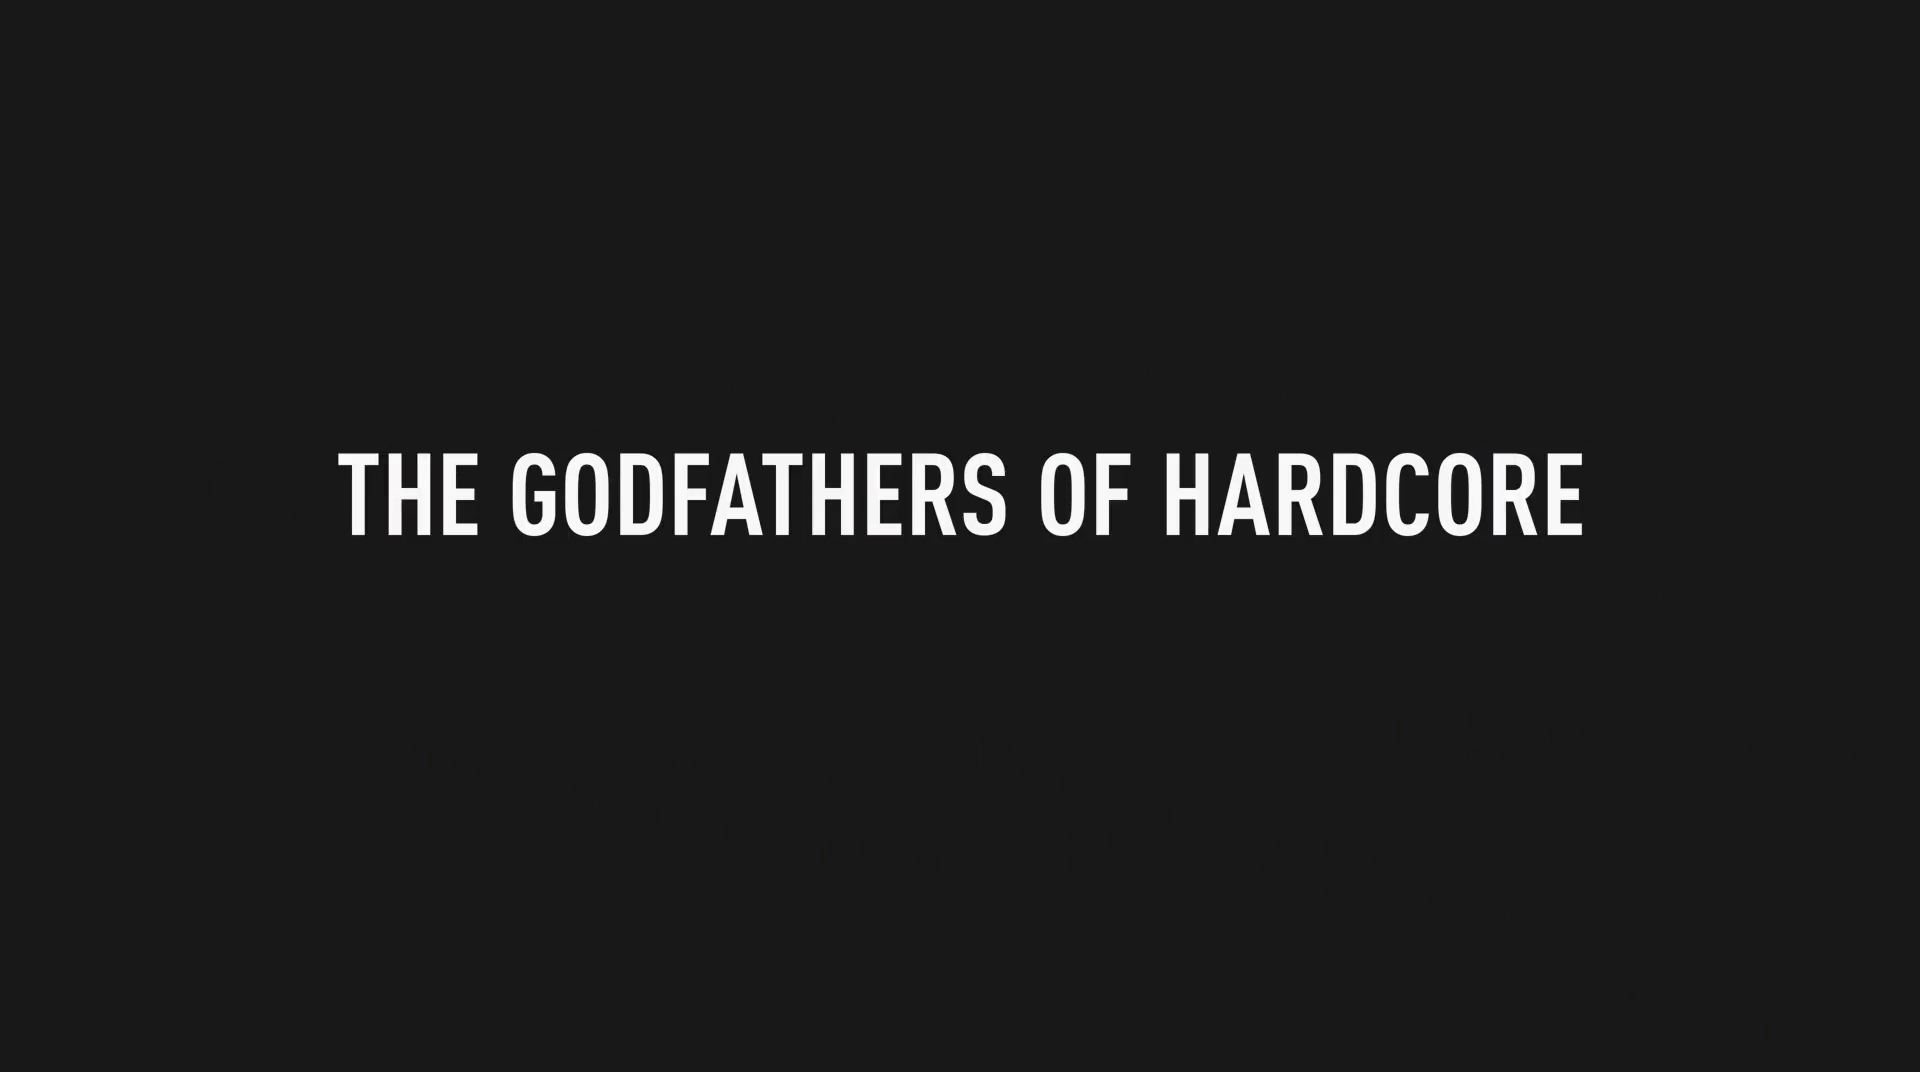 "The Godfathers of Hardcore", Ian McFarland, 2017